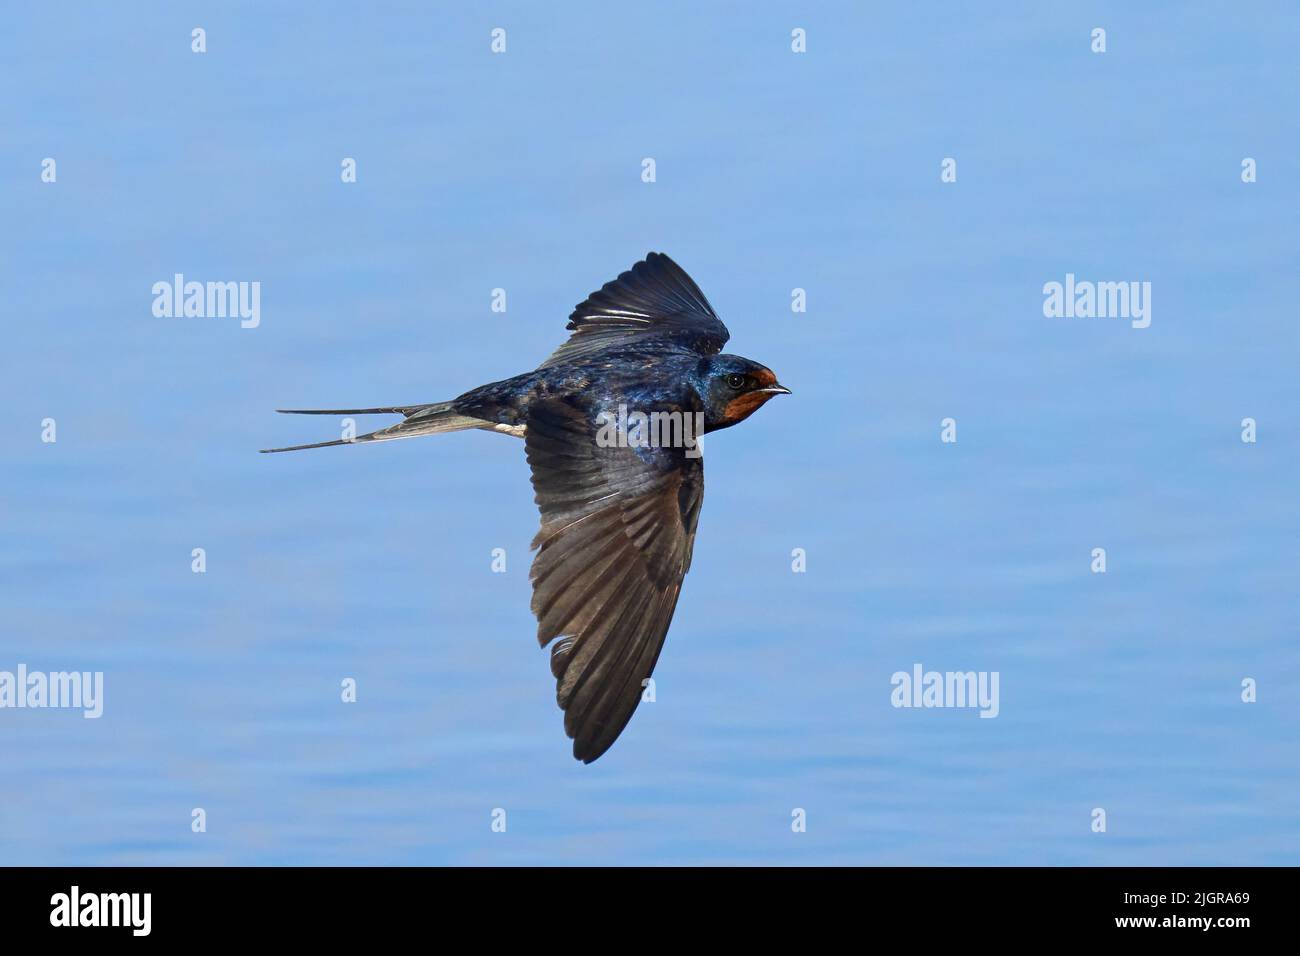 Barn swallow (Hirundo rustica) in its natural environment Stock Photo